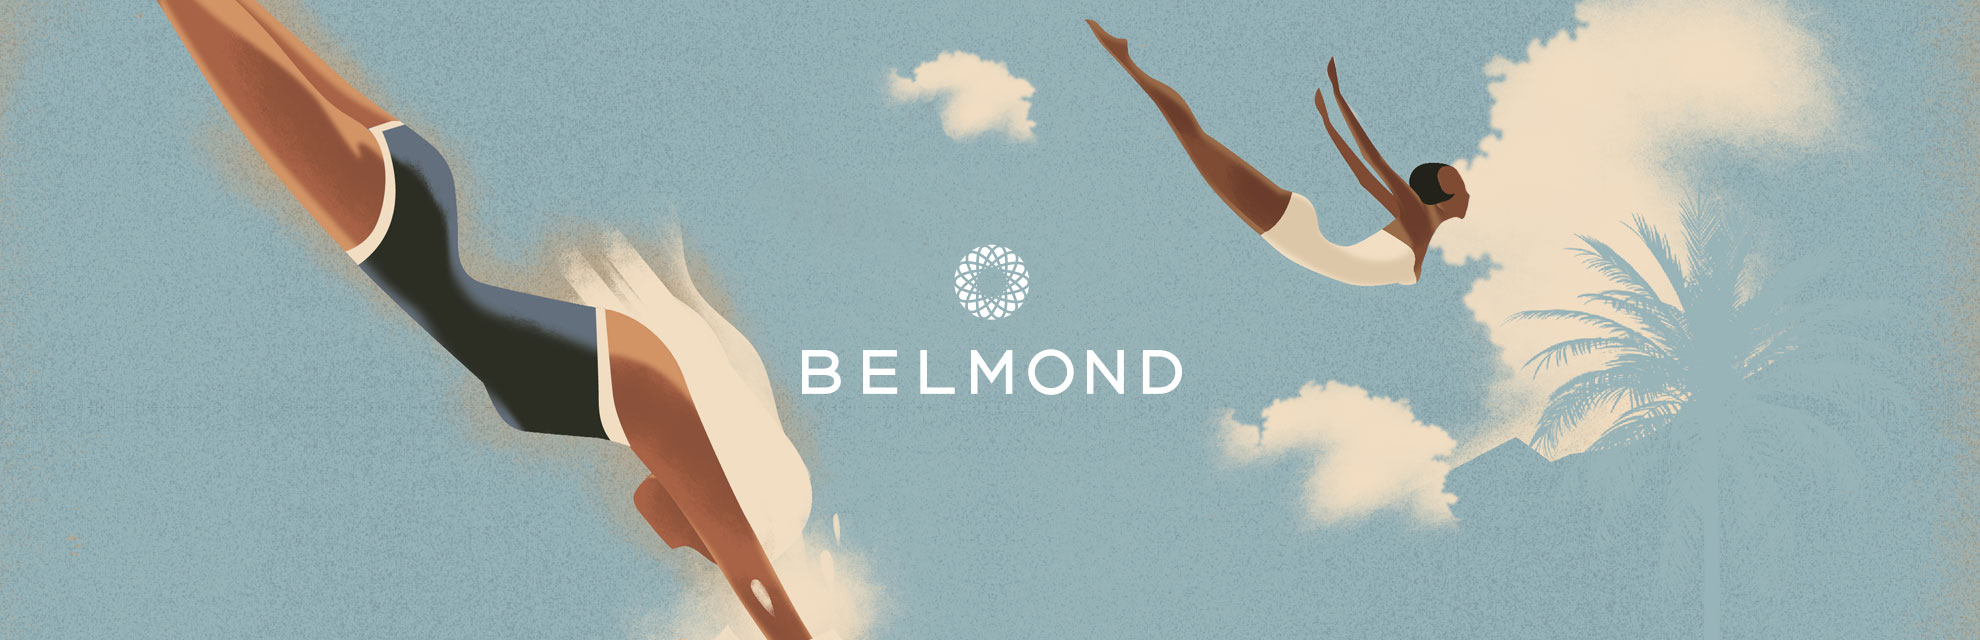 Belmond Wolffe Summer Campaign Dive Into Belmond